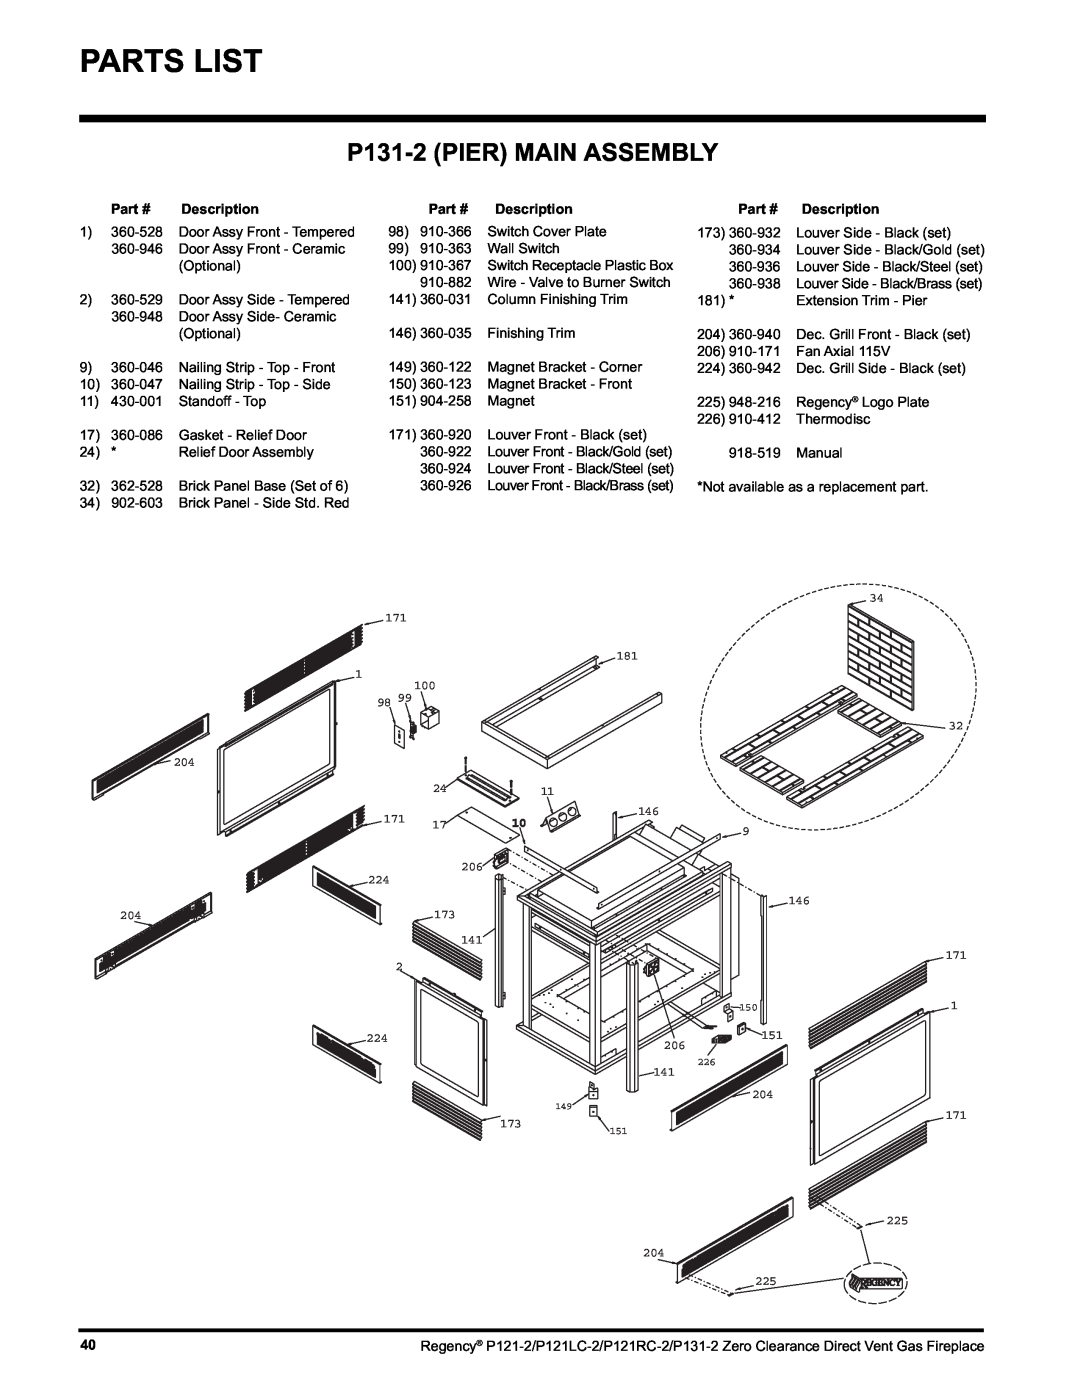 Regency P121RC, P121LC installation manual P131-2PIER MAIN ASSEMBLY, Description 